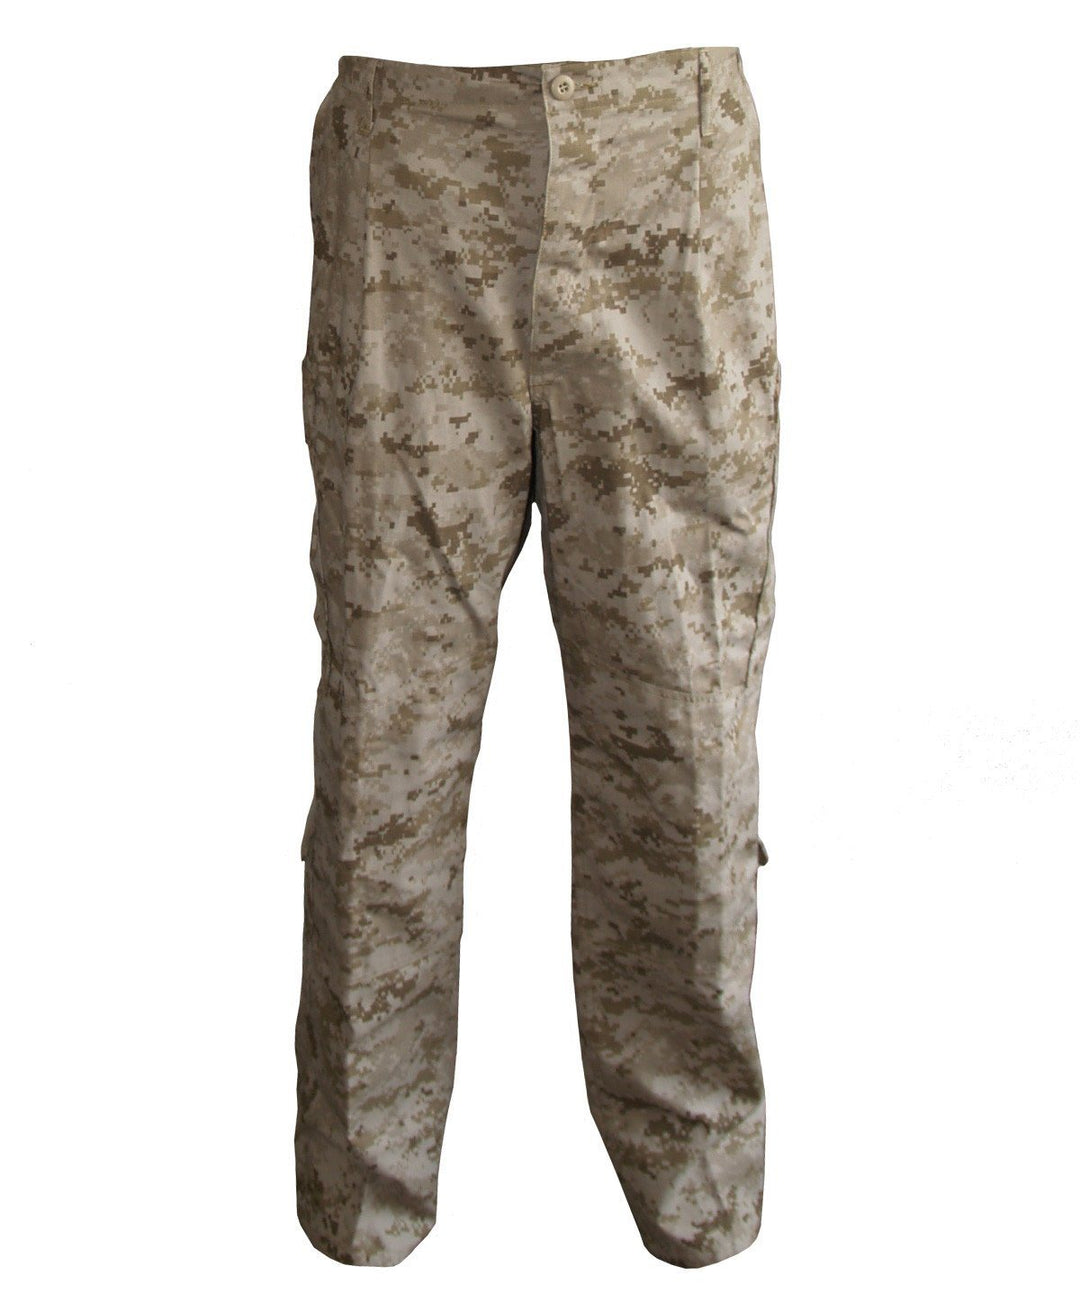 Apparel - Bottoms - Combat - USMC FROG Fire Resistant Combat Pants Desert